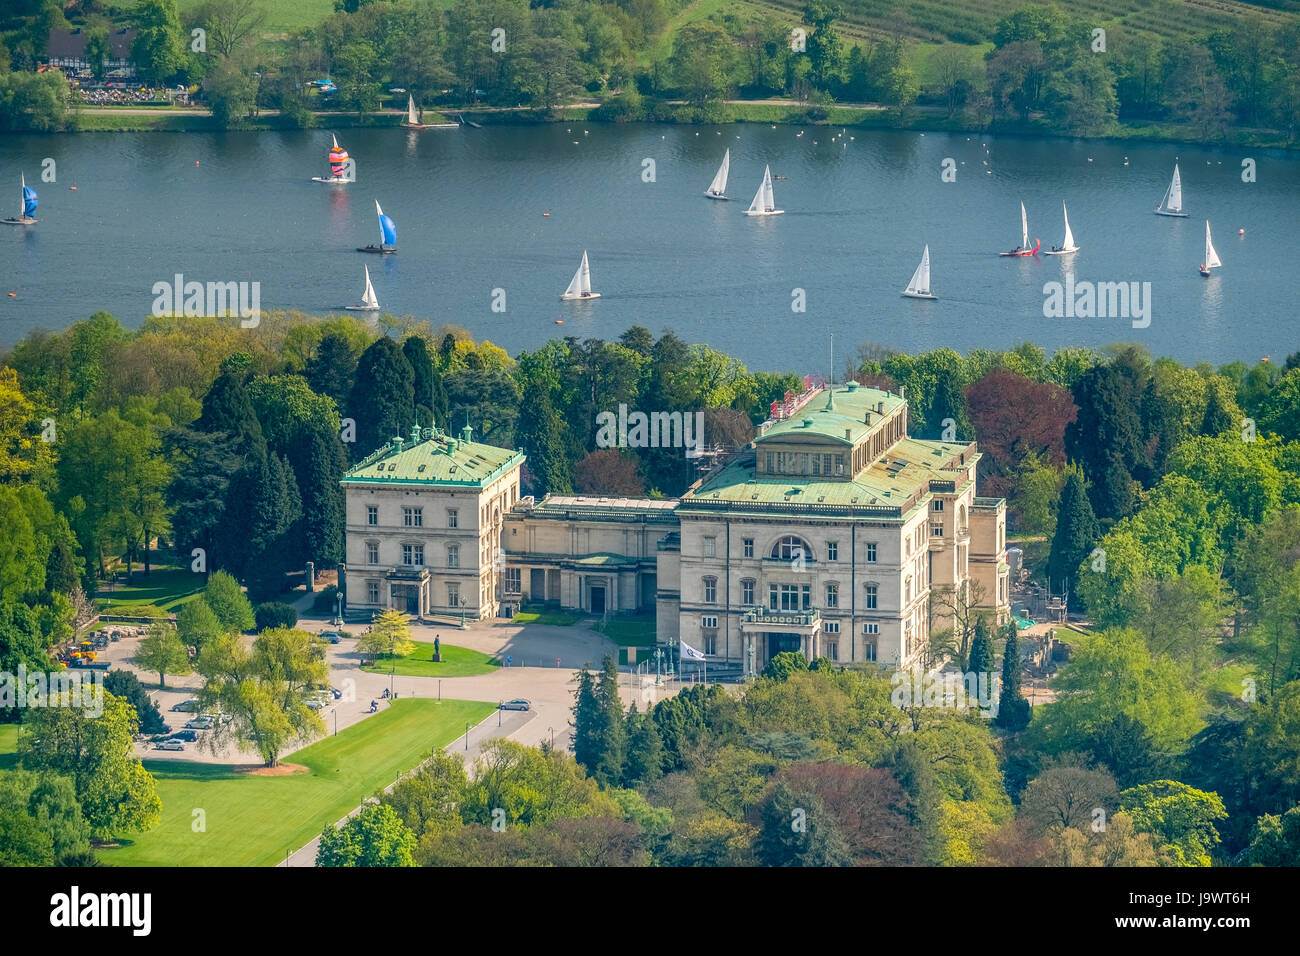 Villa Hügel with sailing boats on Lake Baldeney, Essen, Ruhr area, North Rhine-Westphalia, Germany Stock Photo